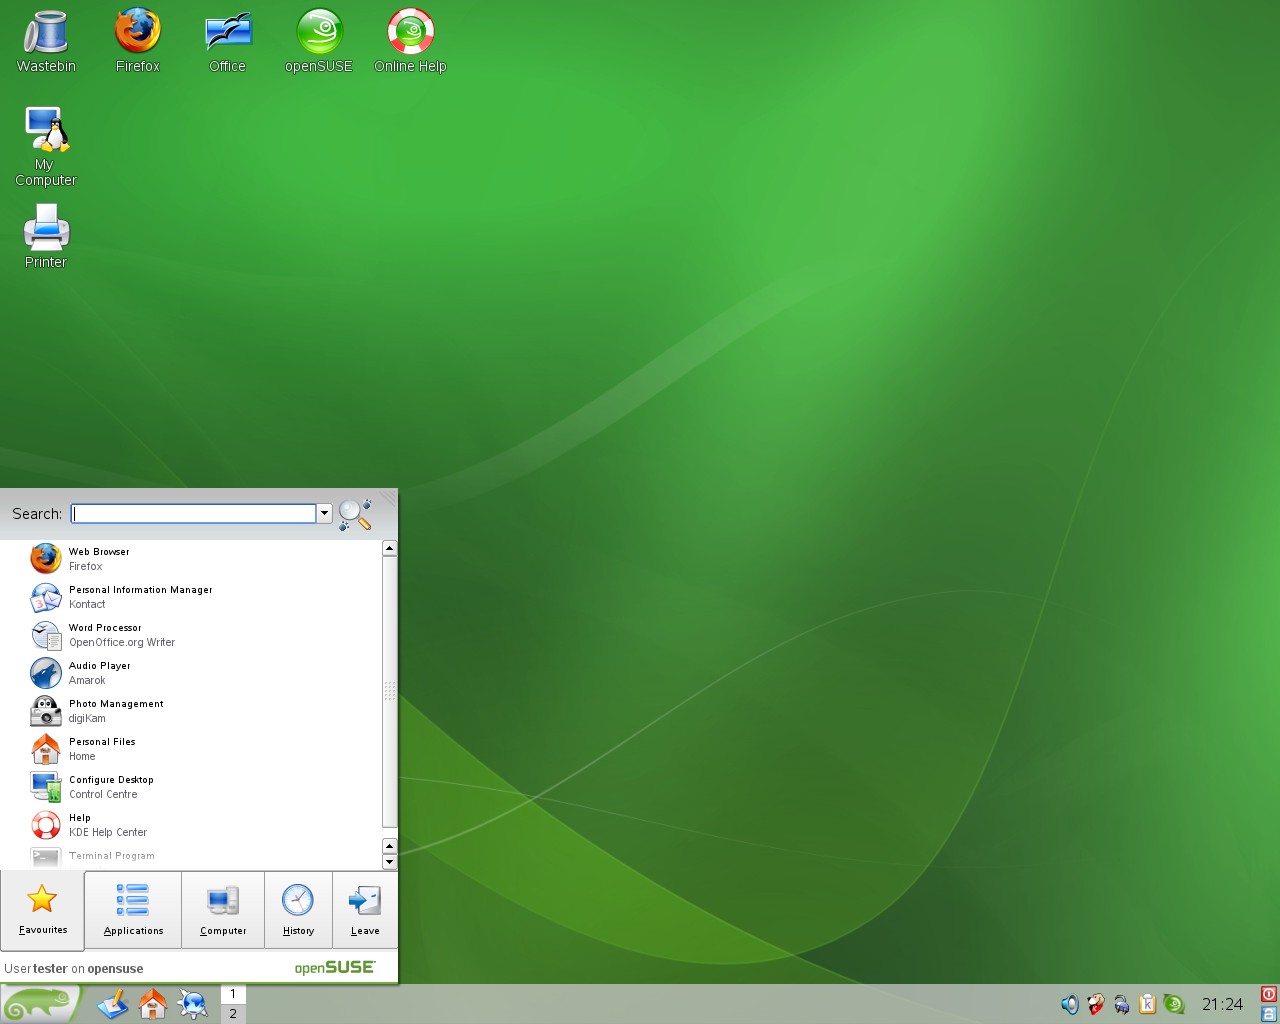 Izšel openSUSE 10.3